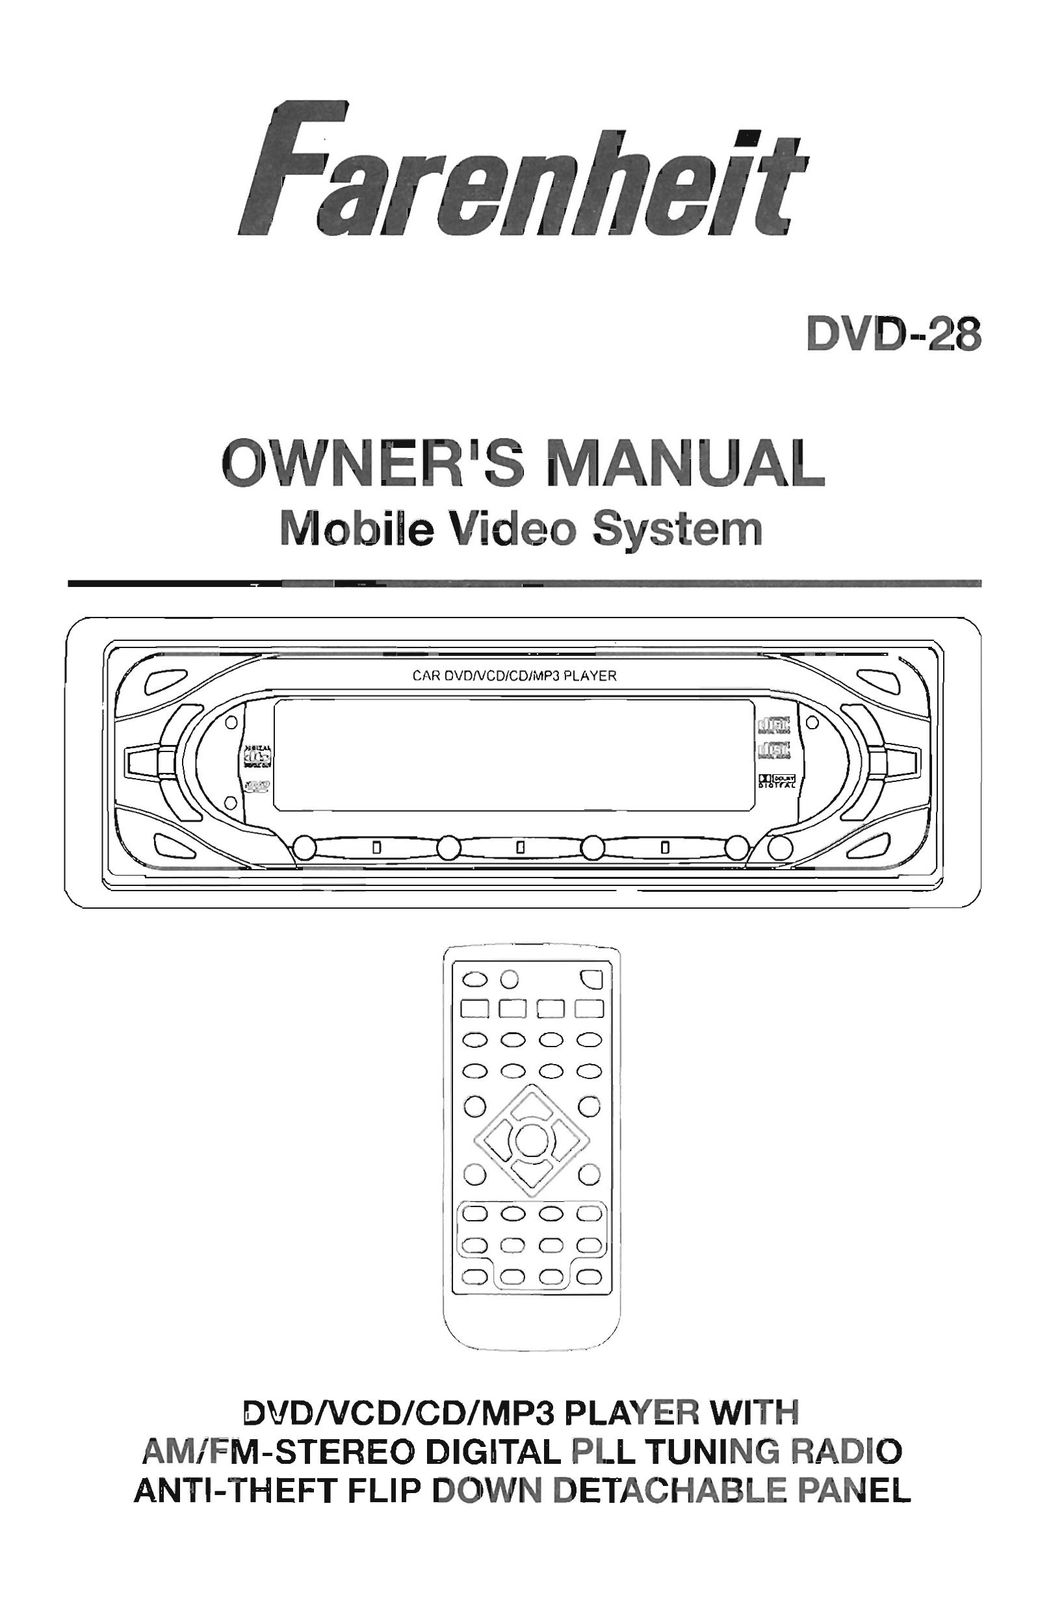 Farenheit Technologies DVD-28 Car Stereo System User Manual